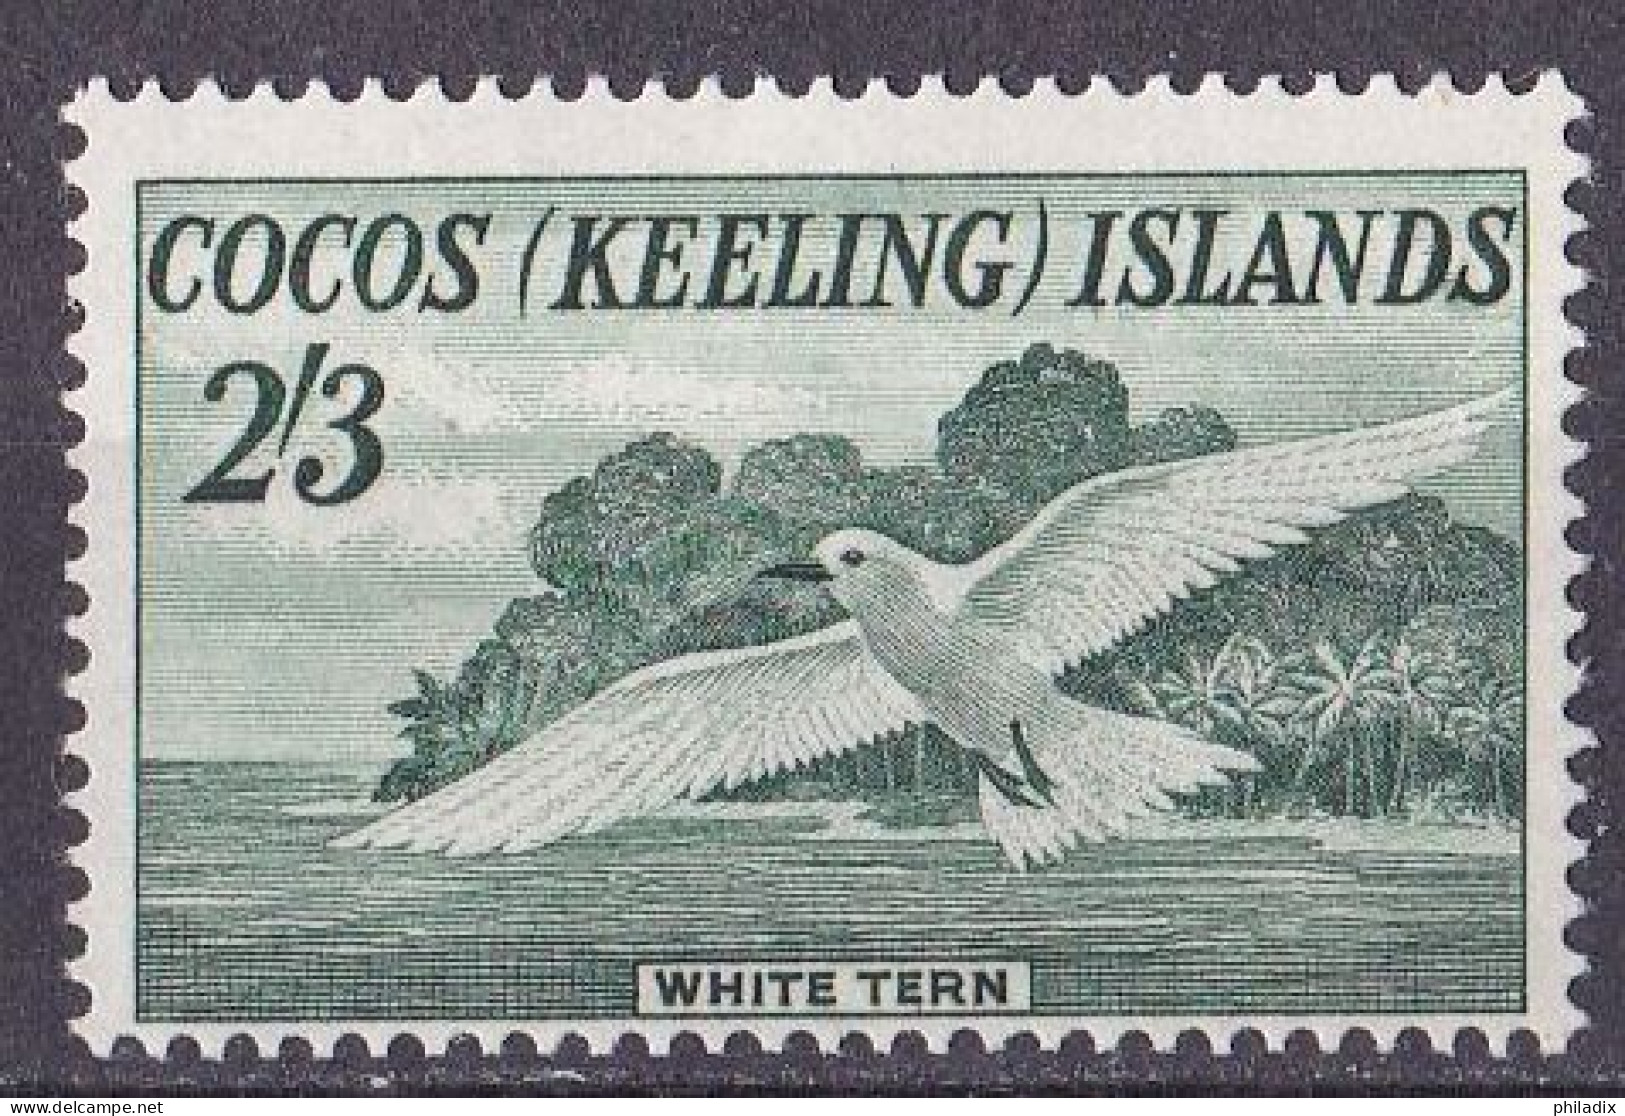 Kokosinseln (Keeling Island) Marke Von 1963 **/MNH (A5-9) - Islas Cocos (Keeling)